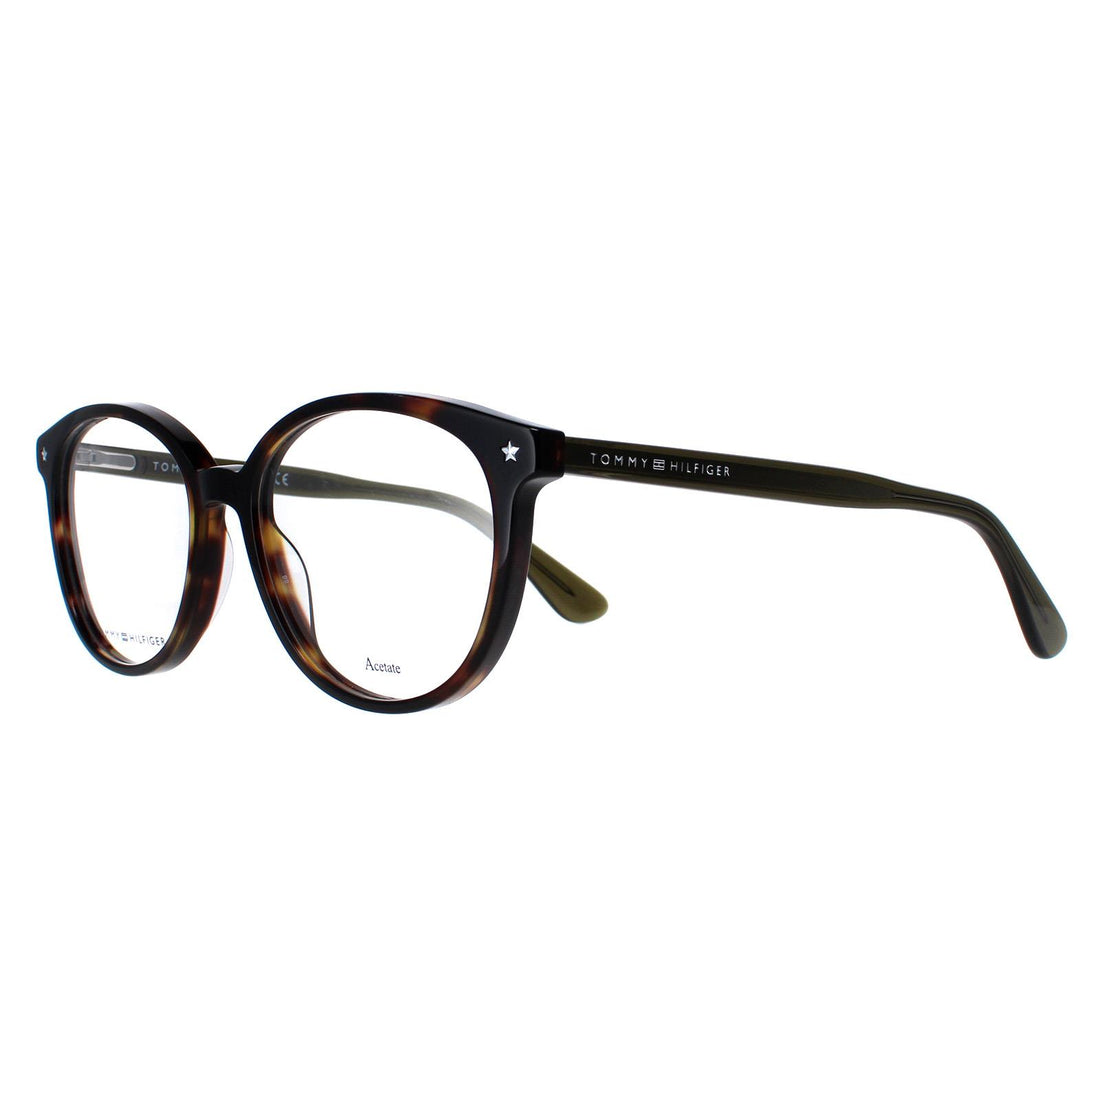 Tommy Hilfiger Glasses Frames TH1552 086 Dark Havana Women